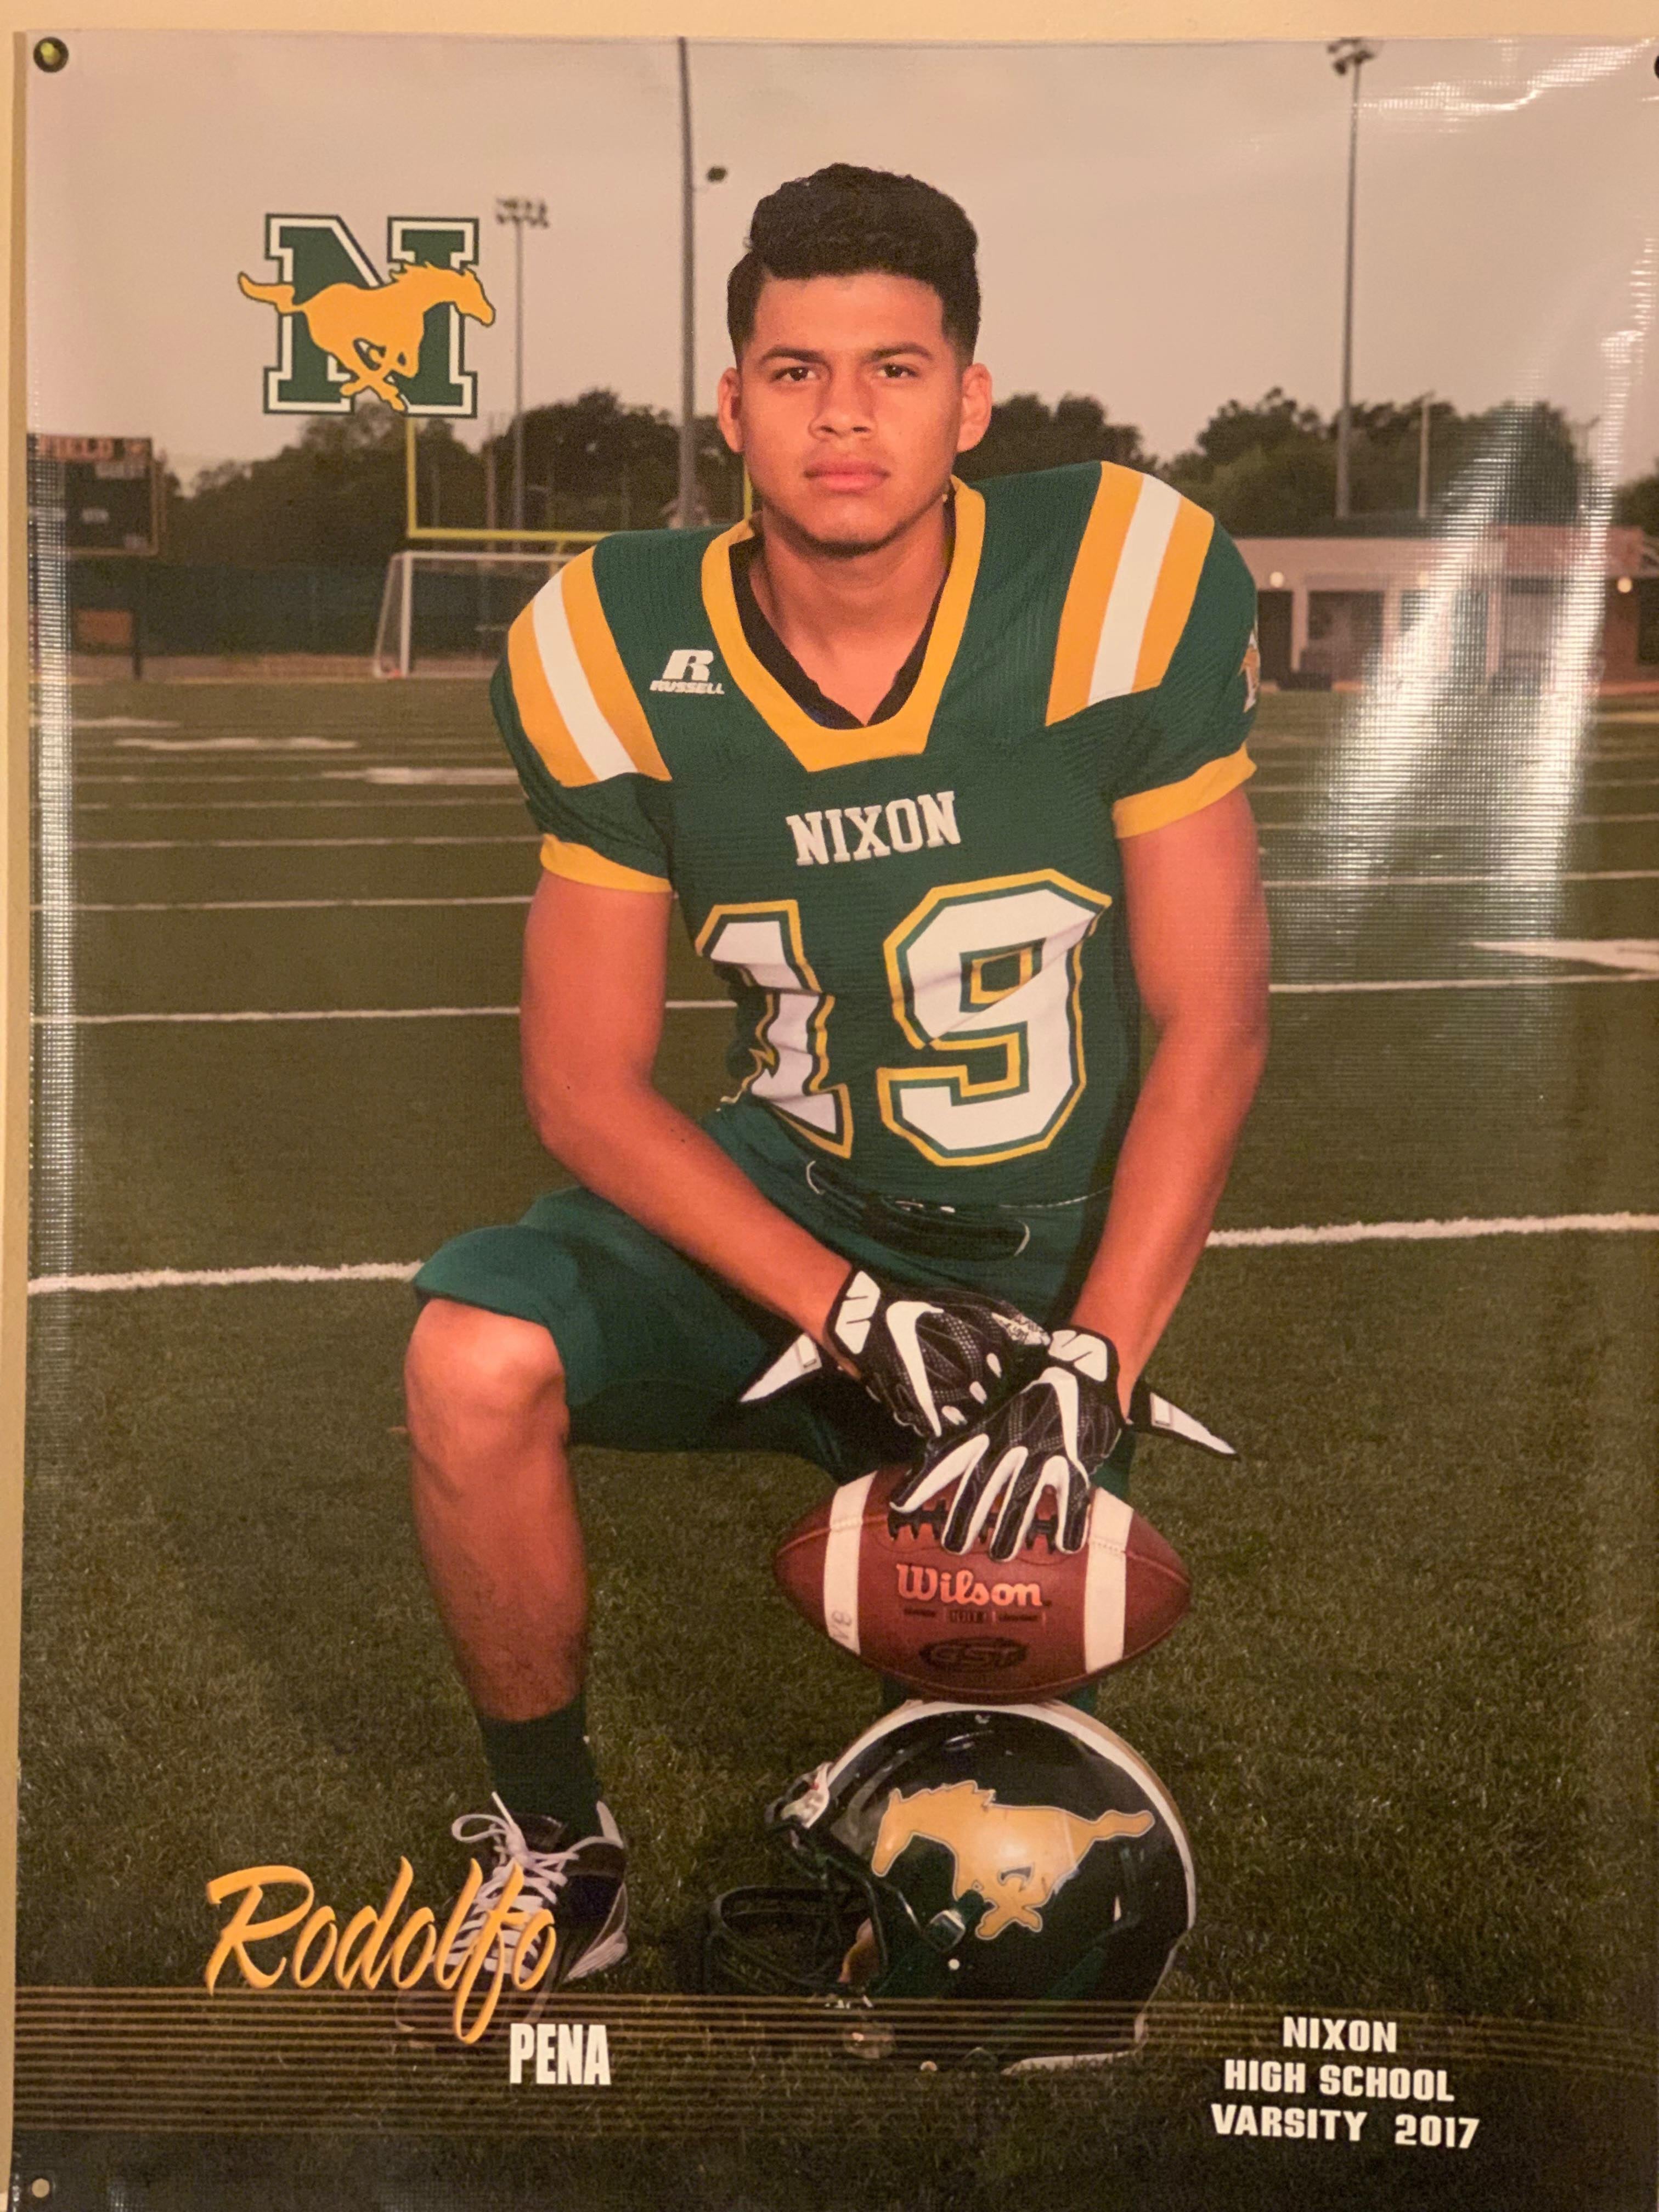 Rodolfo ‘Rudy’ Pena played football, basketball and track at Nixon High School in Laredo Texas